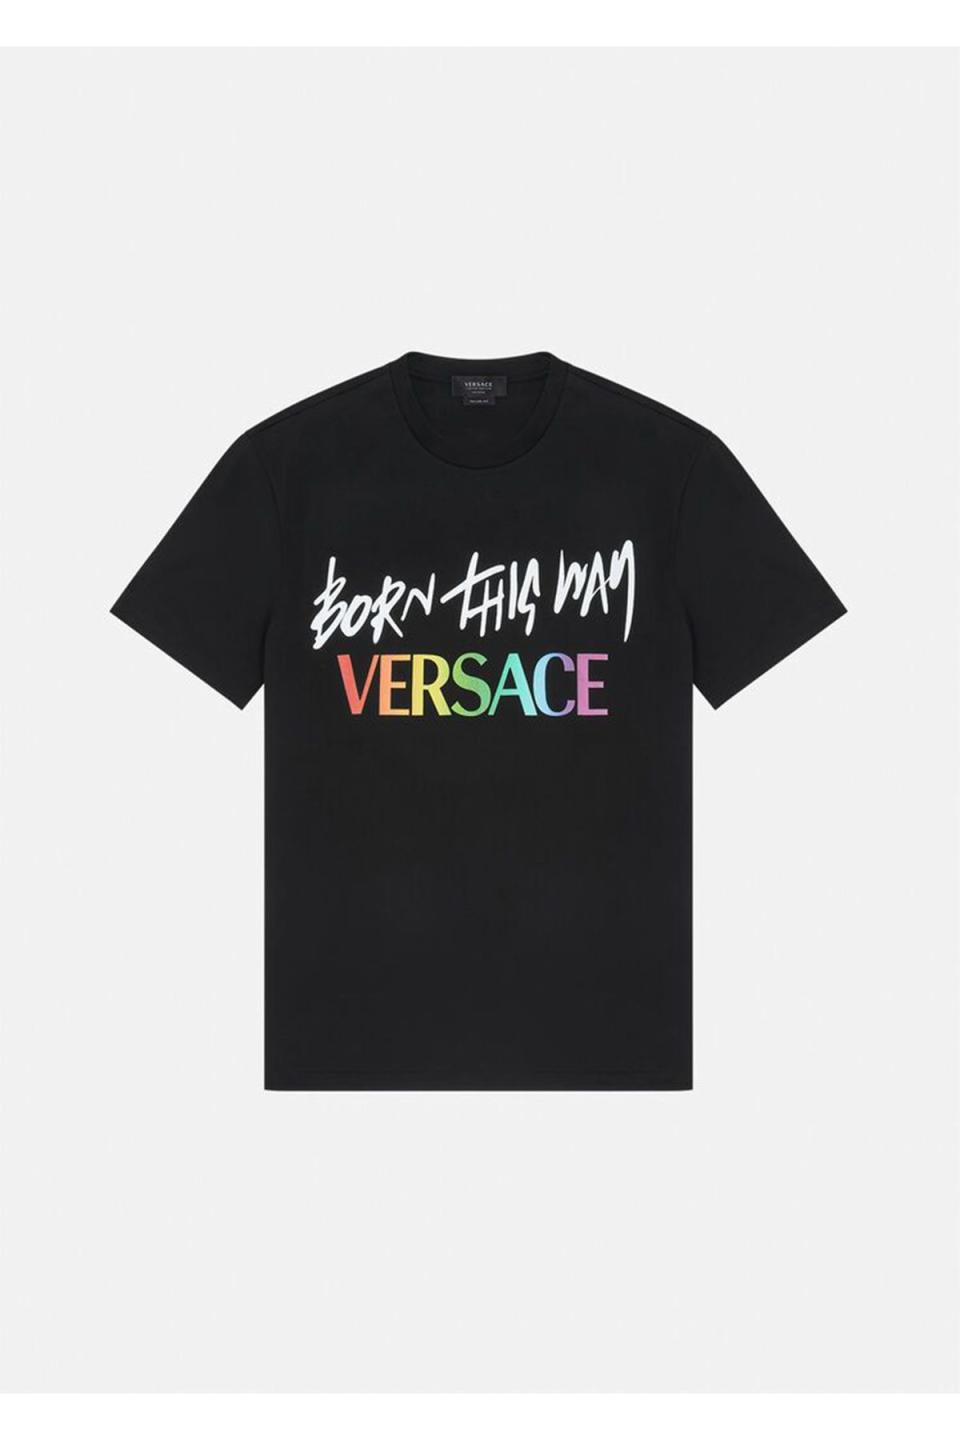 Versace x Born This Way Foundation T-Shirt